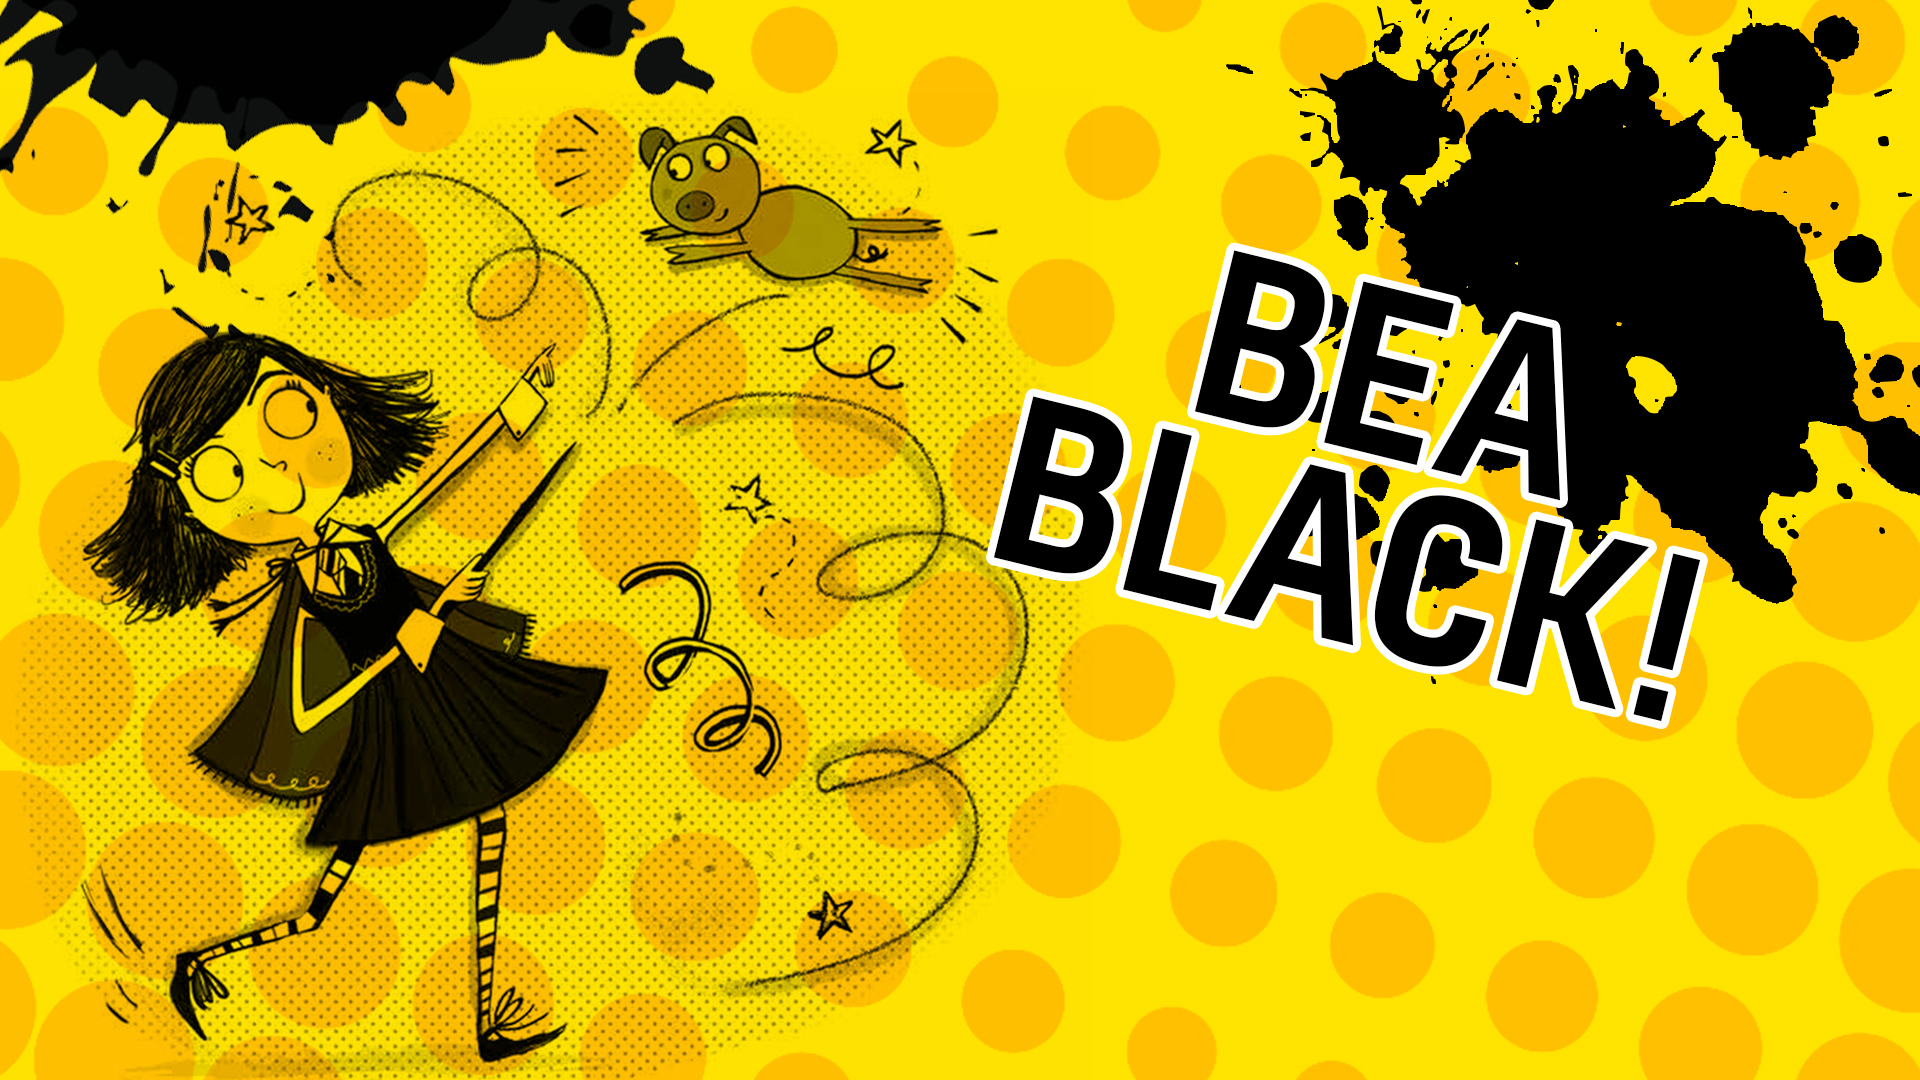 Result: Bea Black